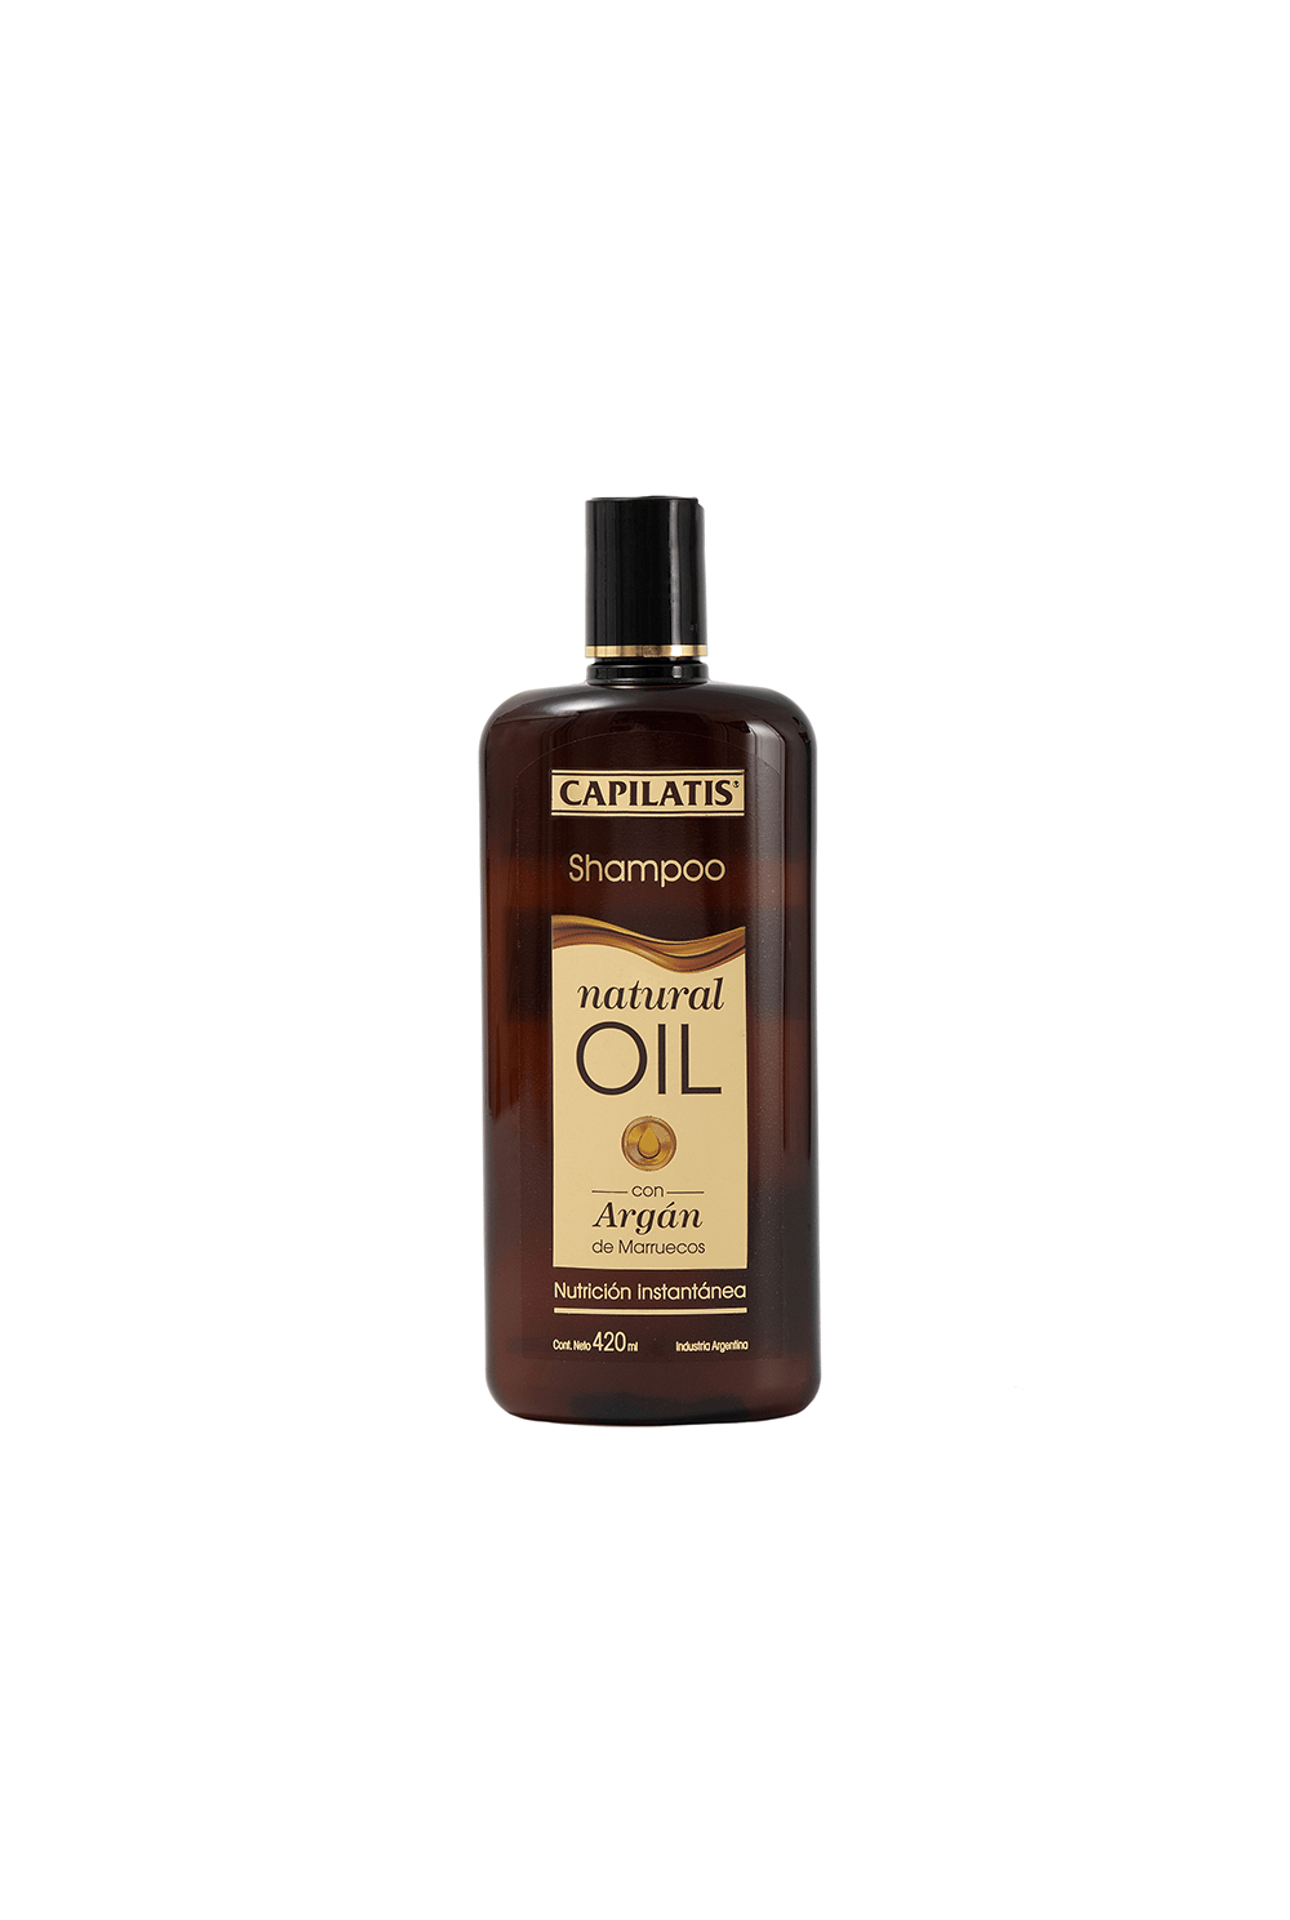 2113953_Capilatis-Shampoo-Natural-Oil-x-420-ml_img1